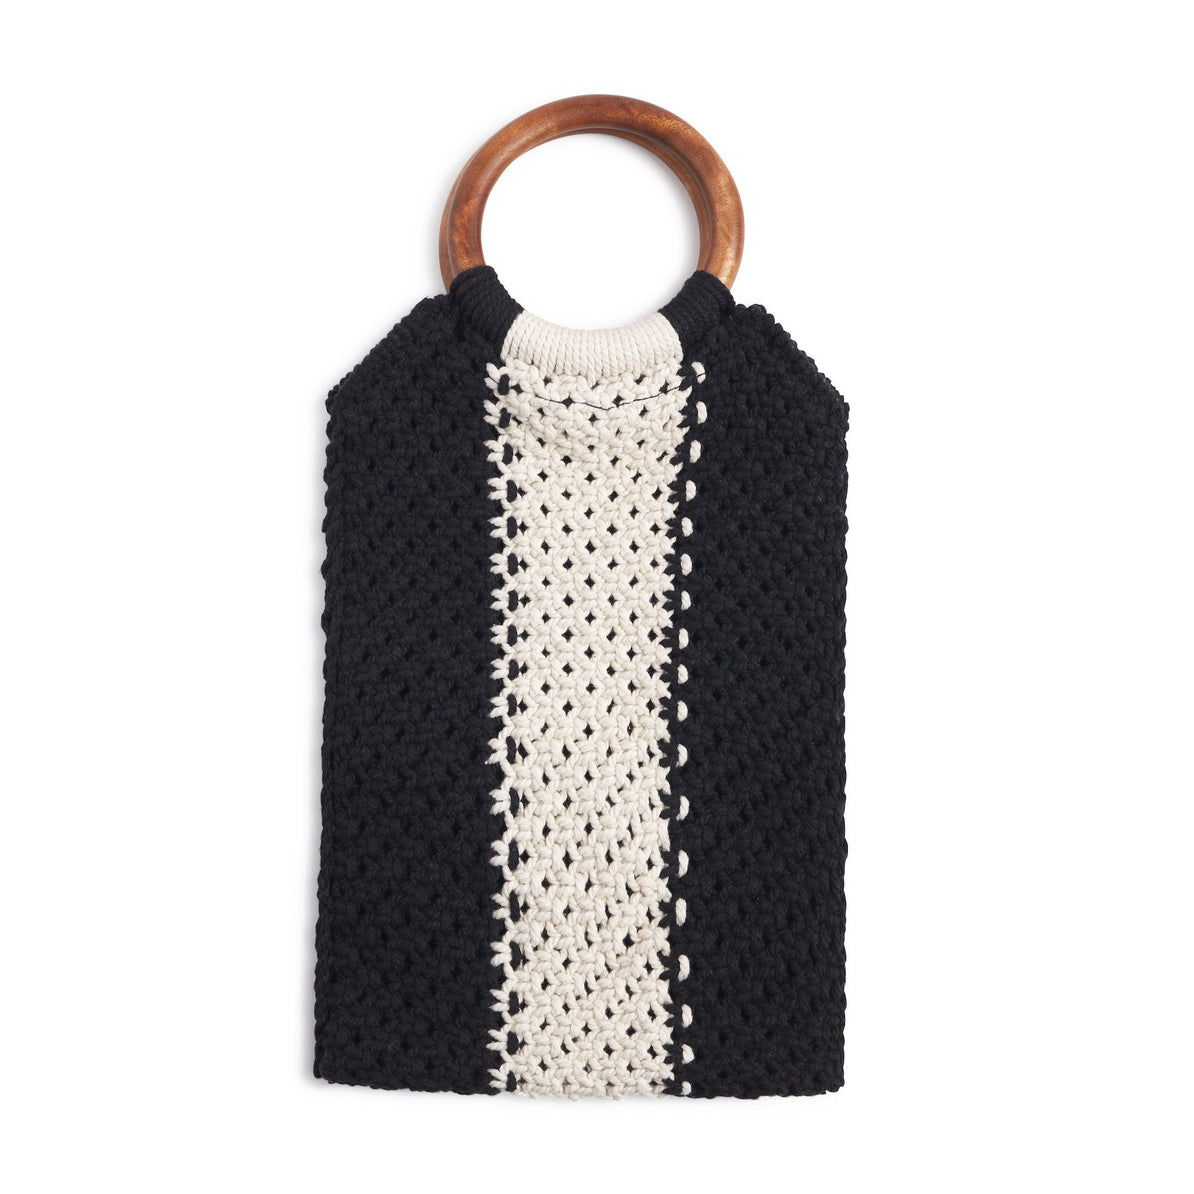 Crochet Macrame Granny Square Tote Bag - Impresa Store